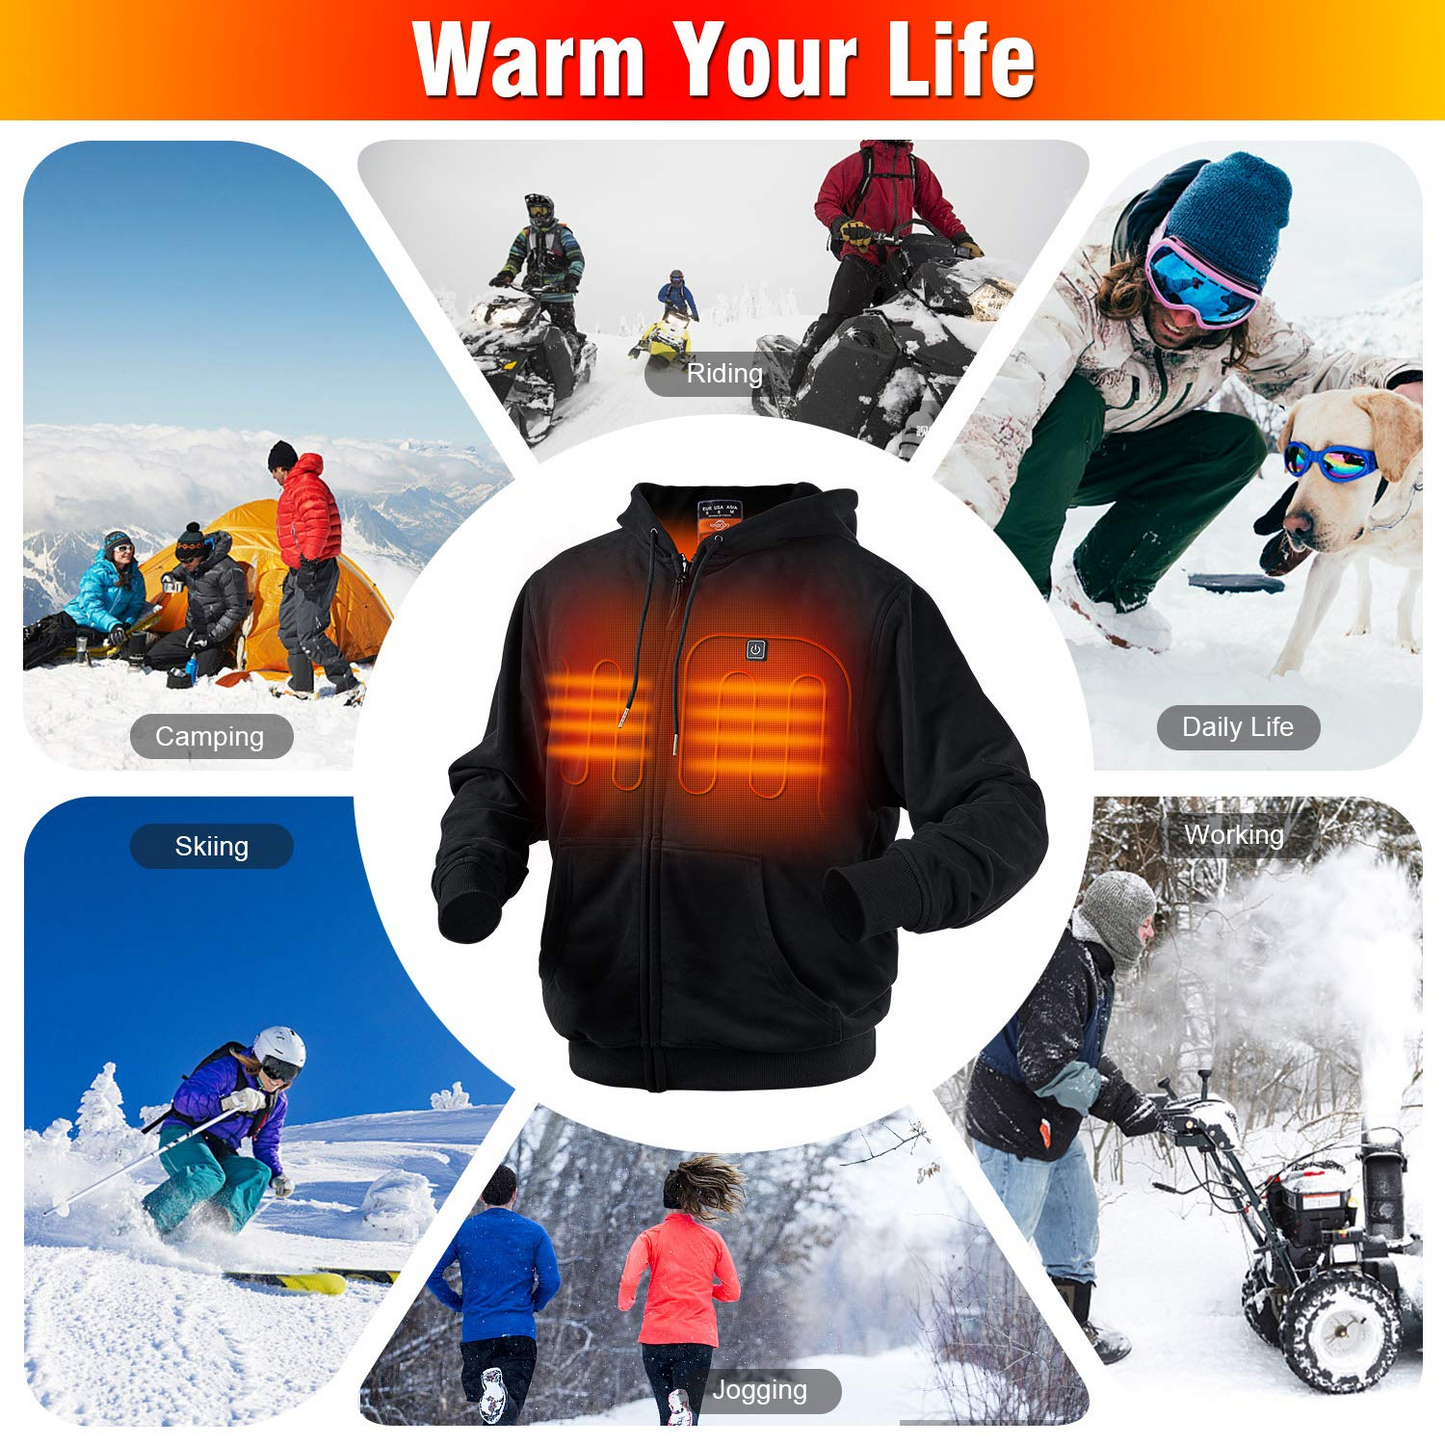 [US Stock] Heated Hoodie Heating Couple Sweatshirt with Battery Pack (Unisex)(Black)